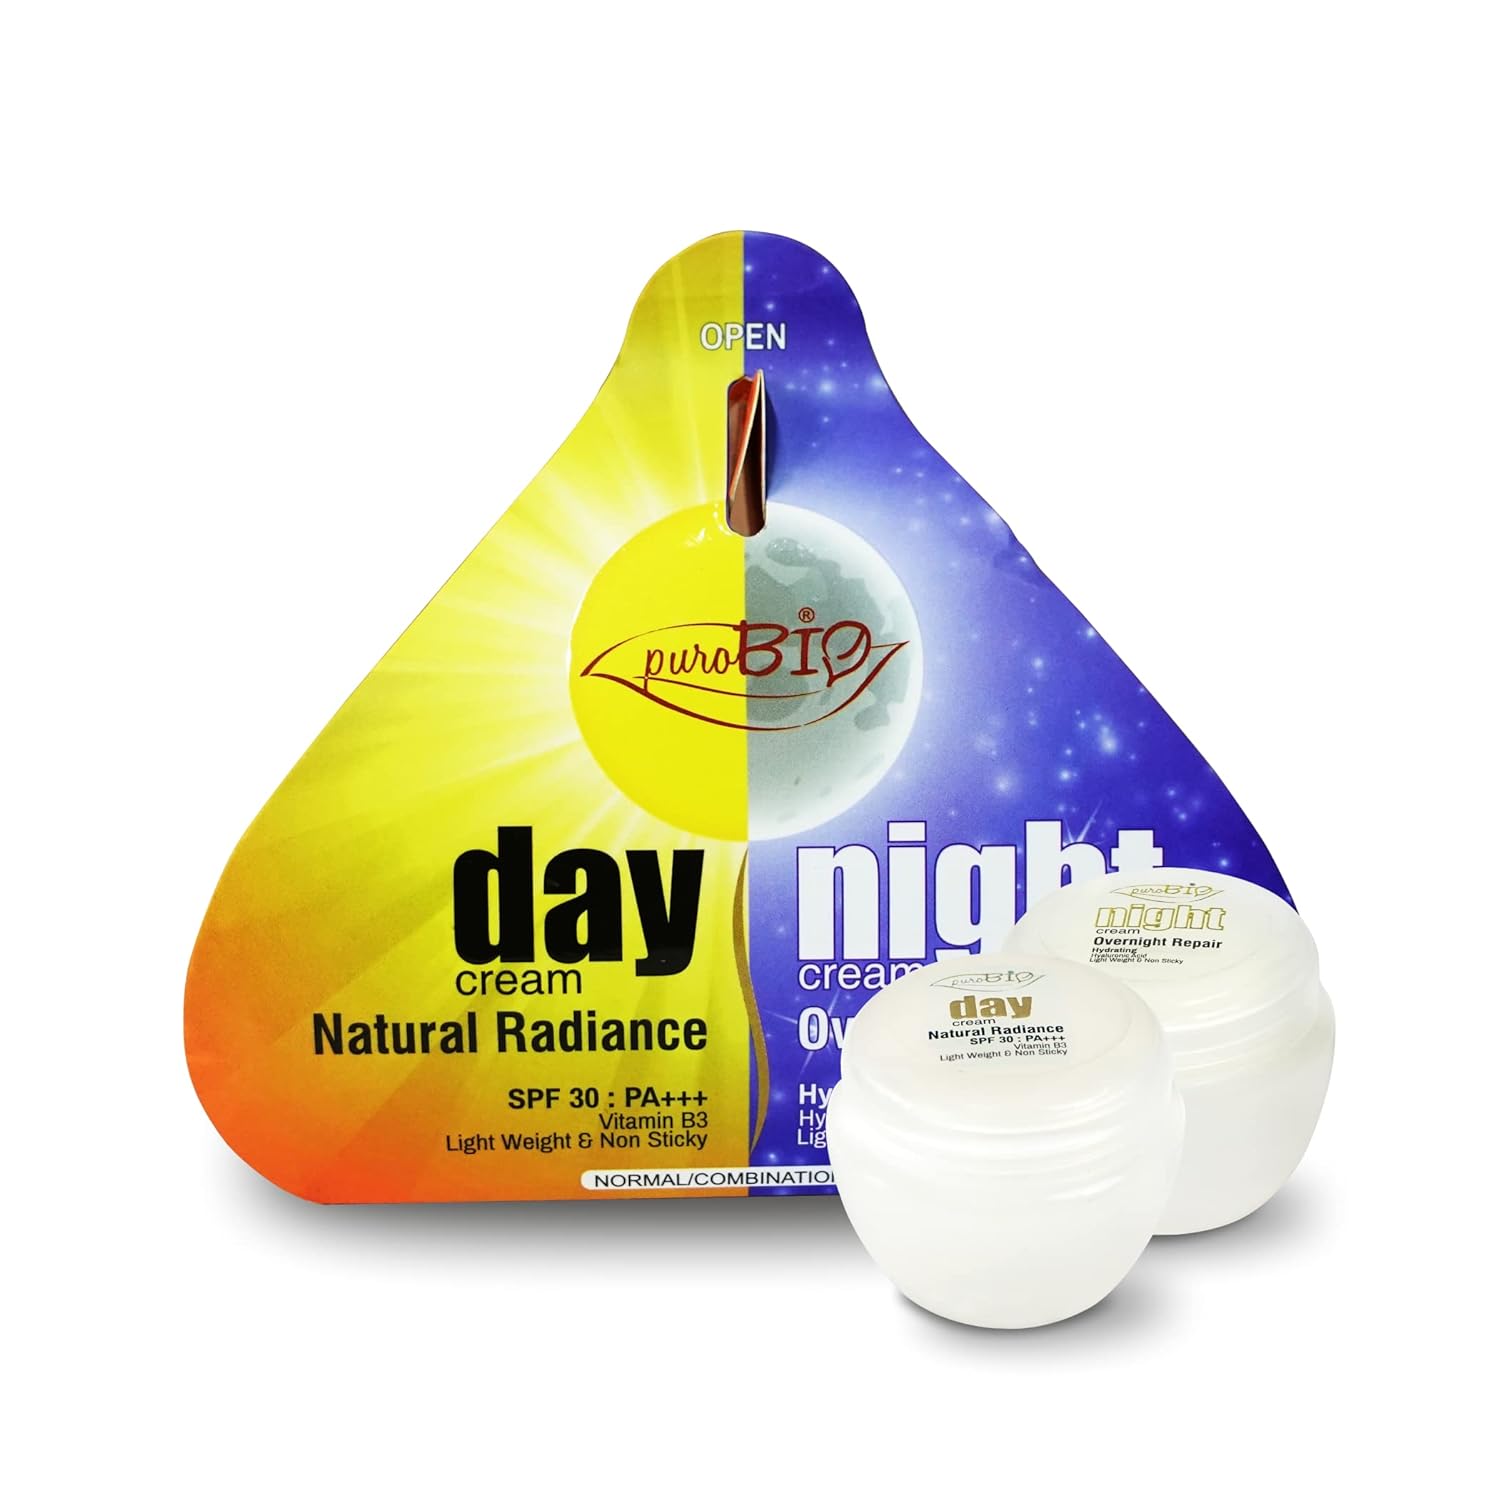  Day And Night spf-30 Cream